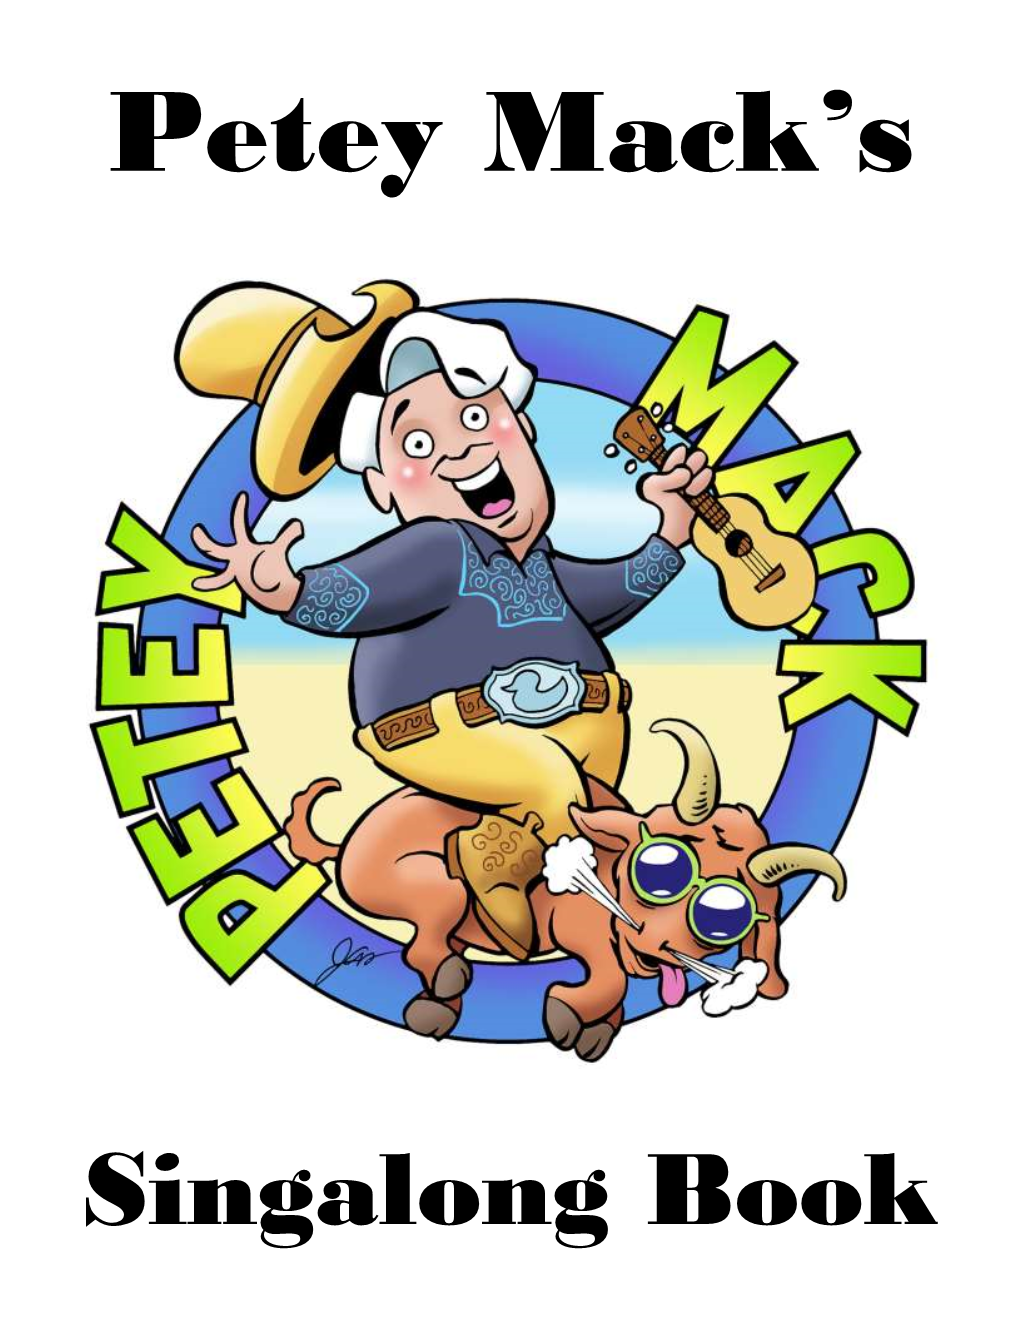 Petey Mack's Singalong Book